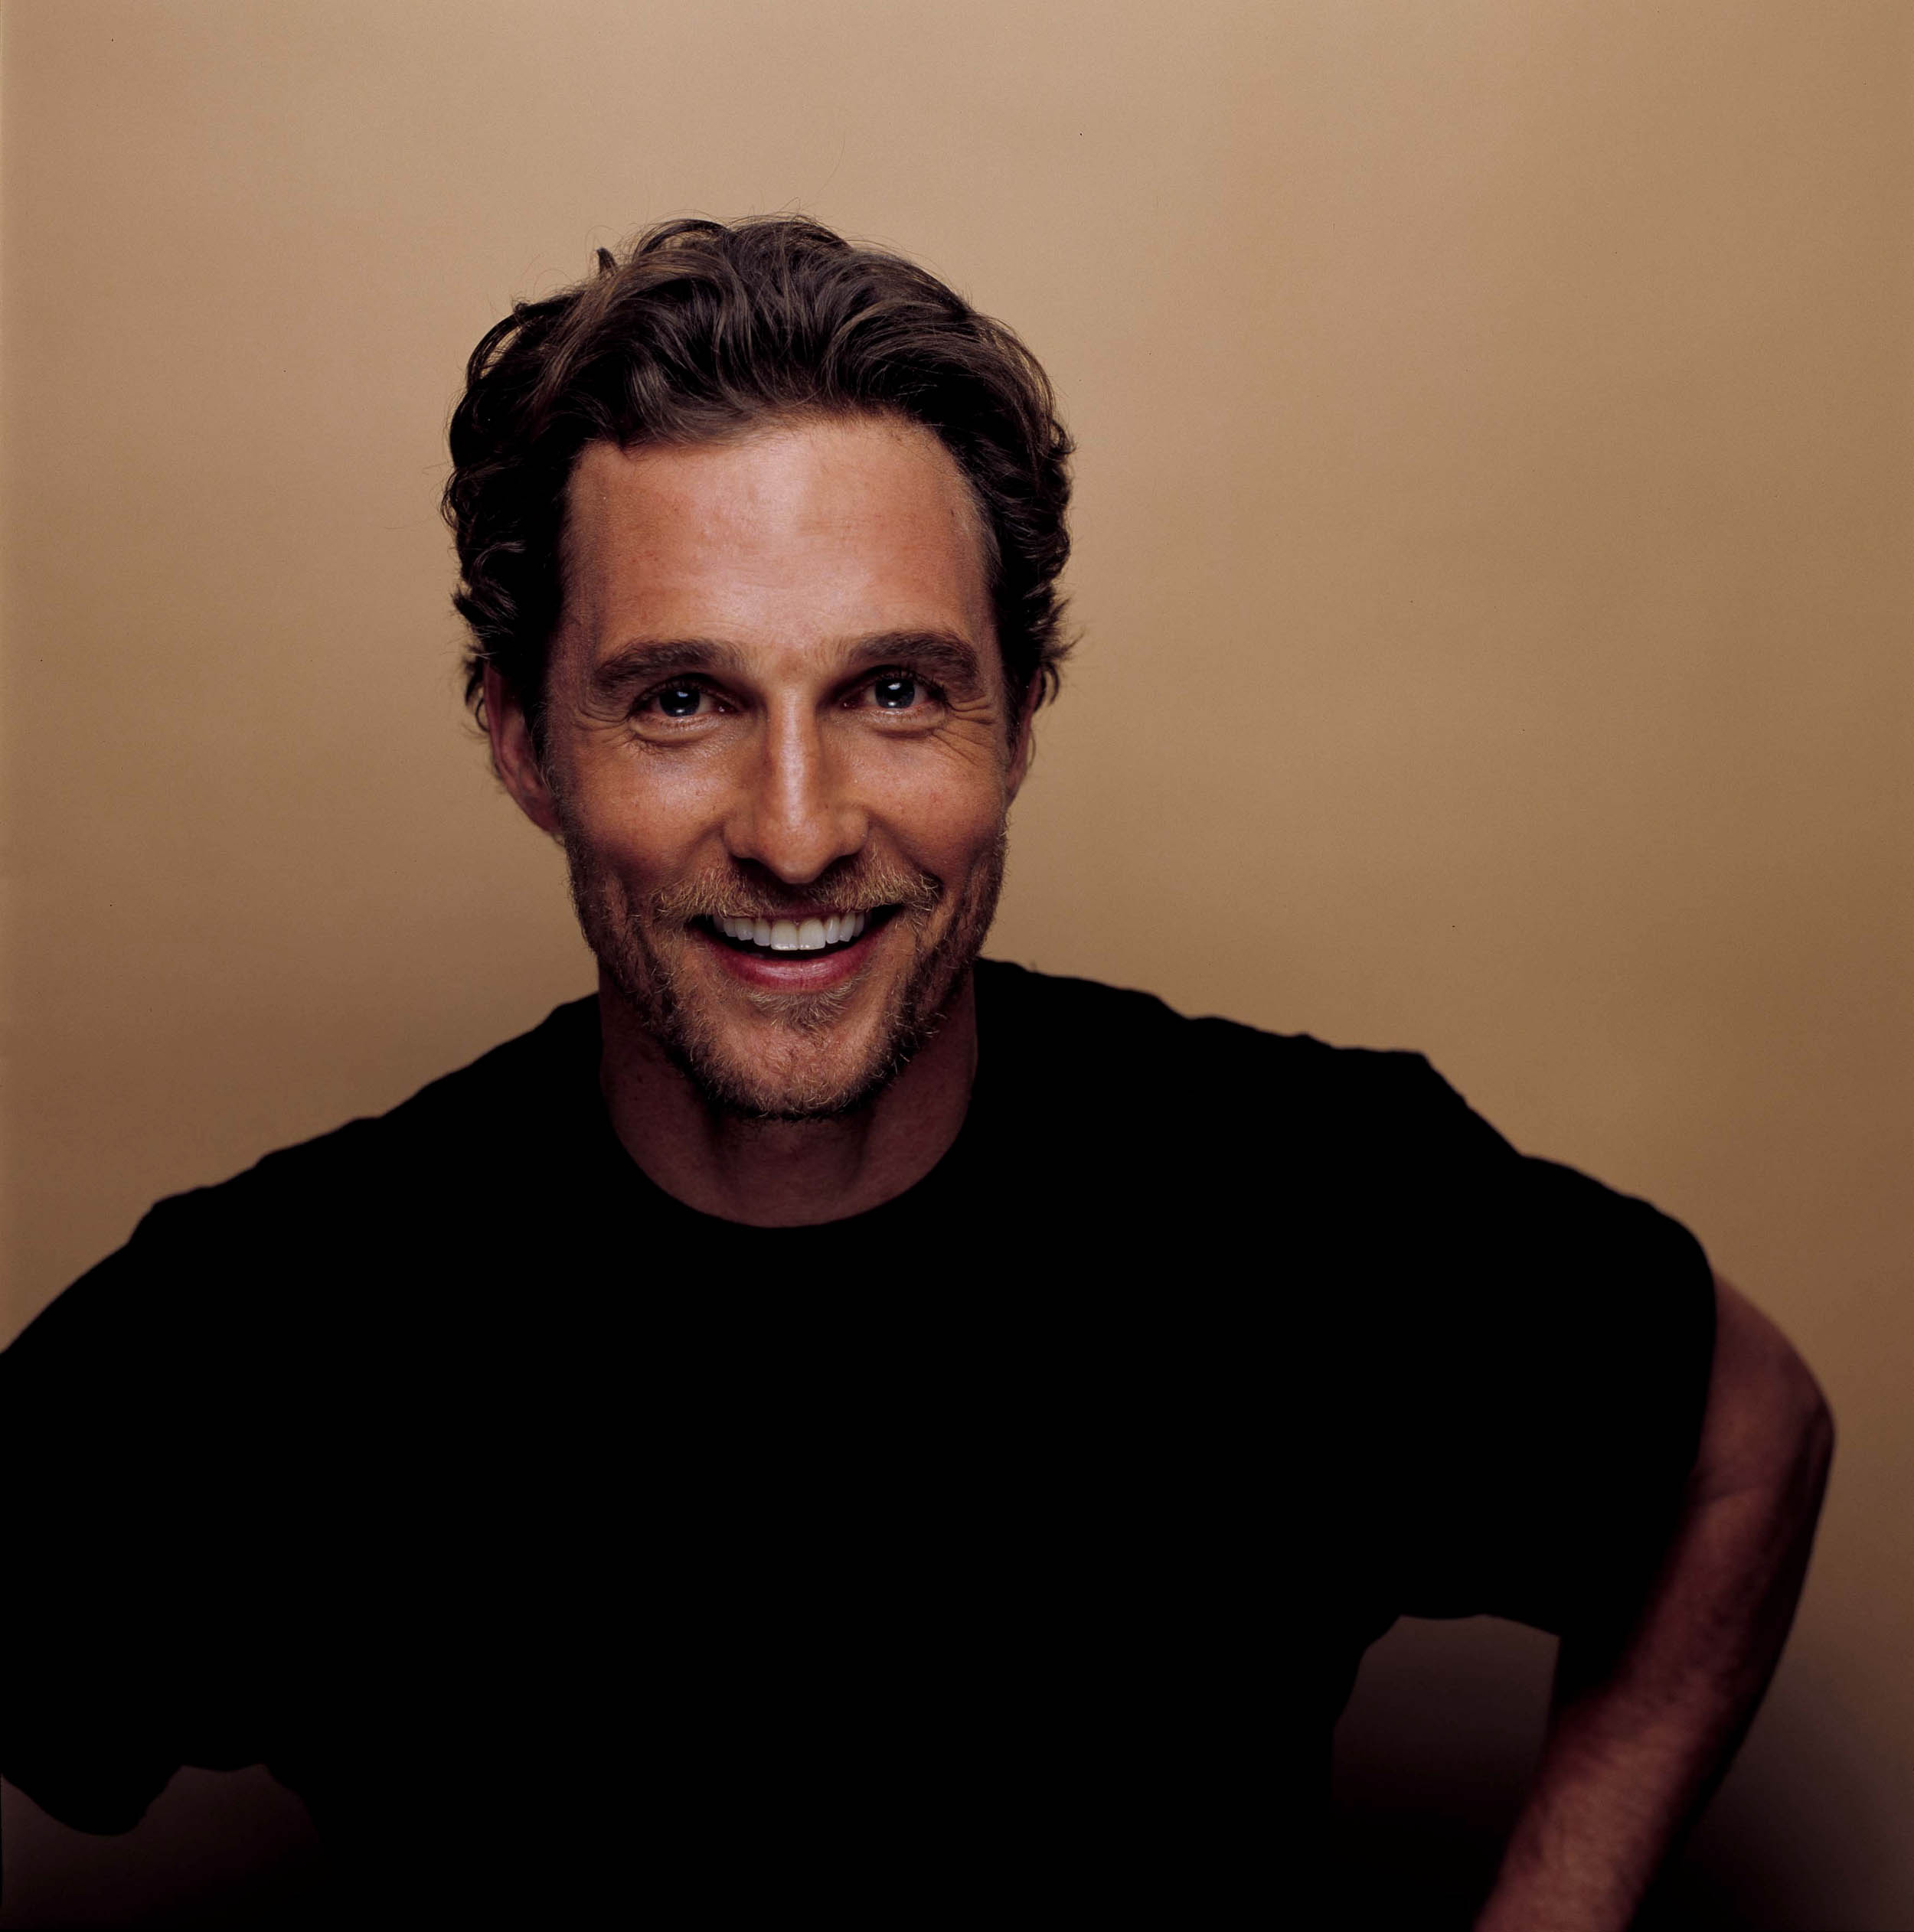 Matthew McConaughey photo 59 of 359 pics, wallpaper - photo #201678 ...